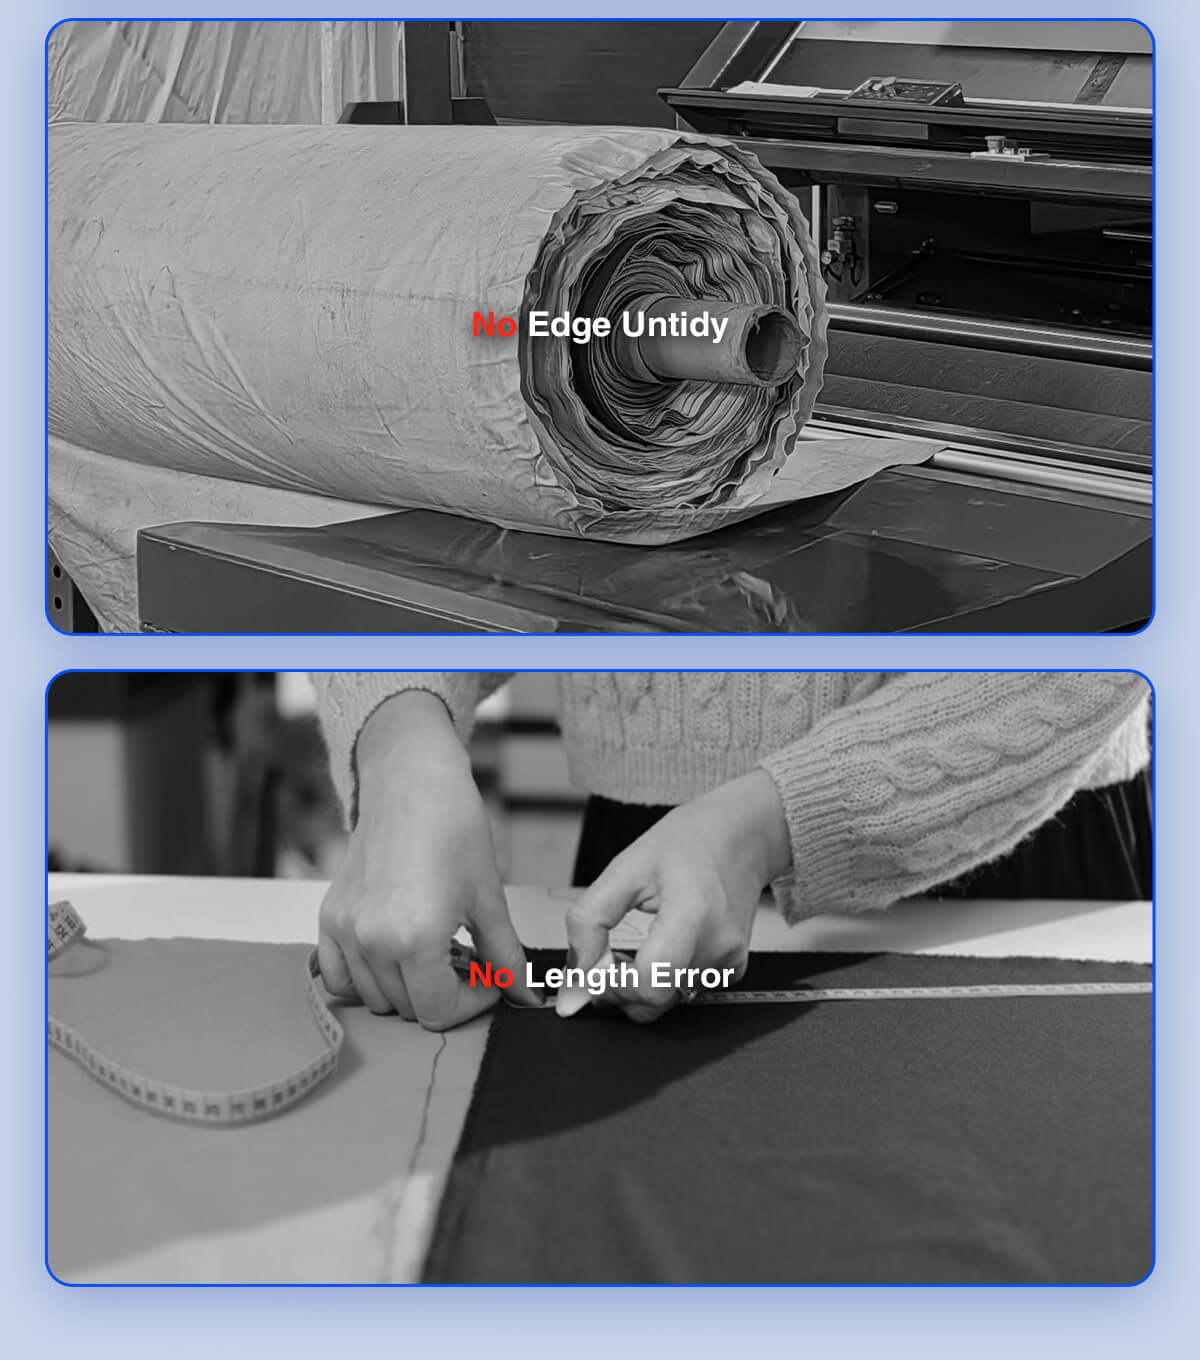 fabric batching machine with no edge untidyno length error